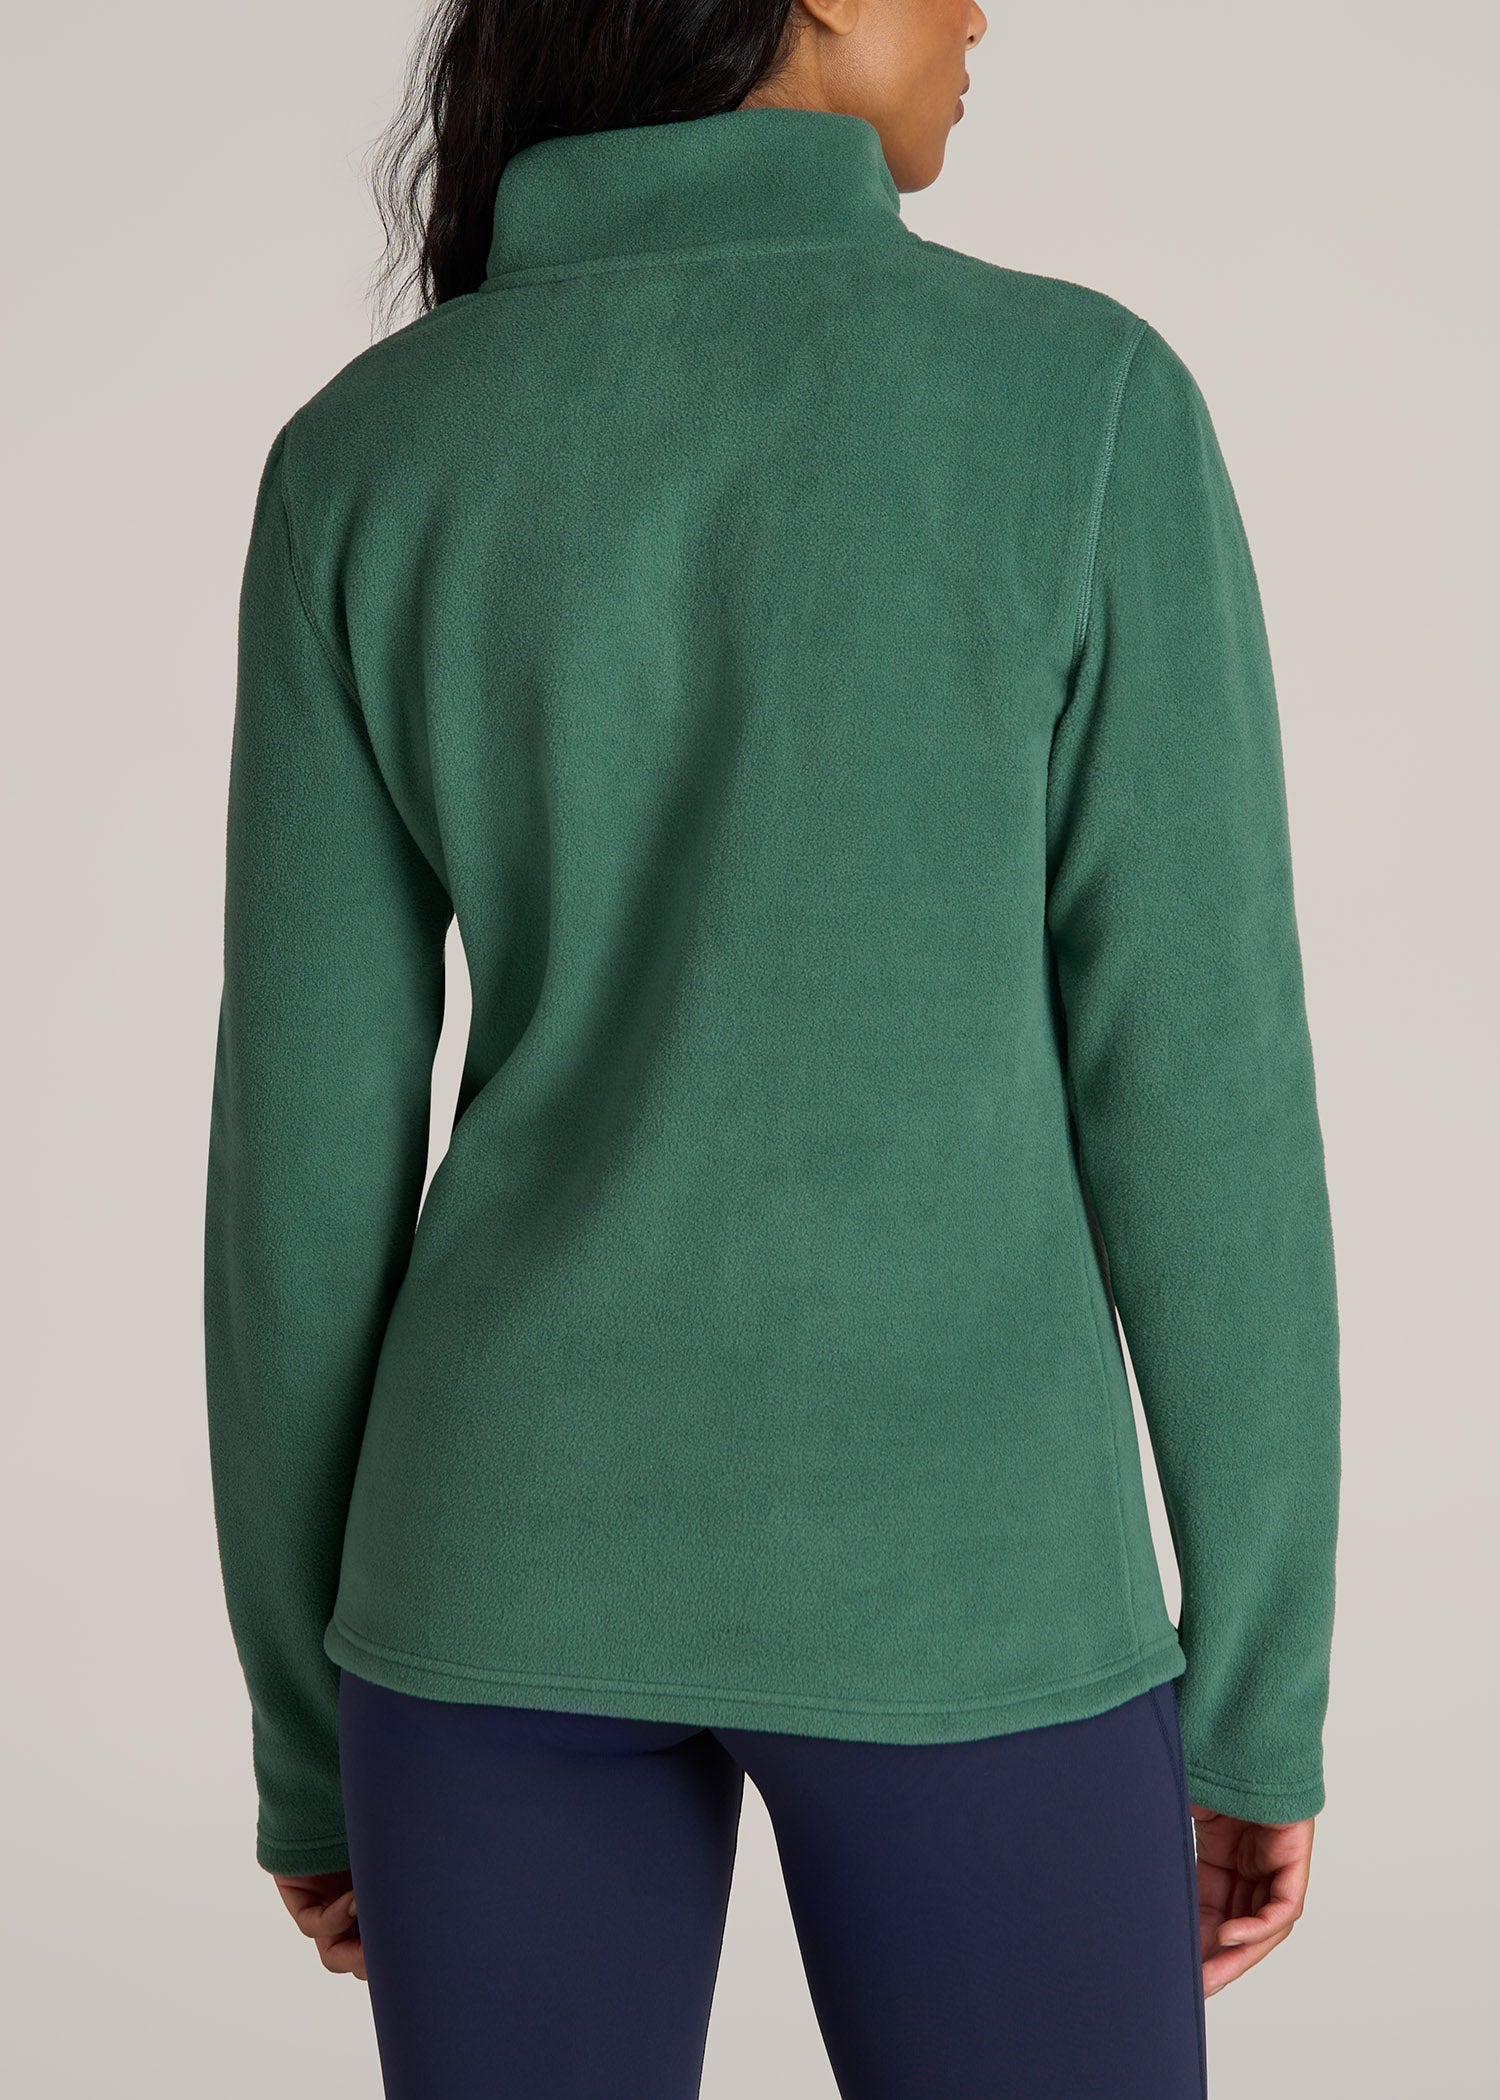 Half Zip Polar Fleece Pullover Sweater for Tall Women